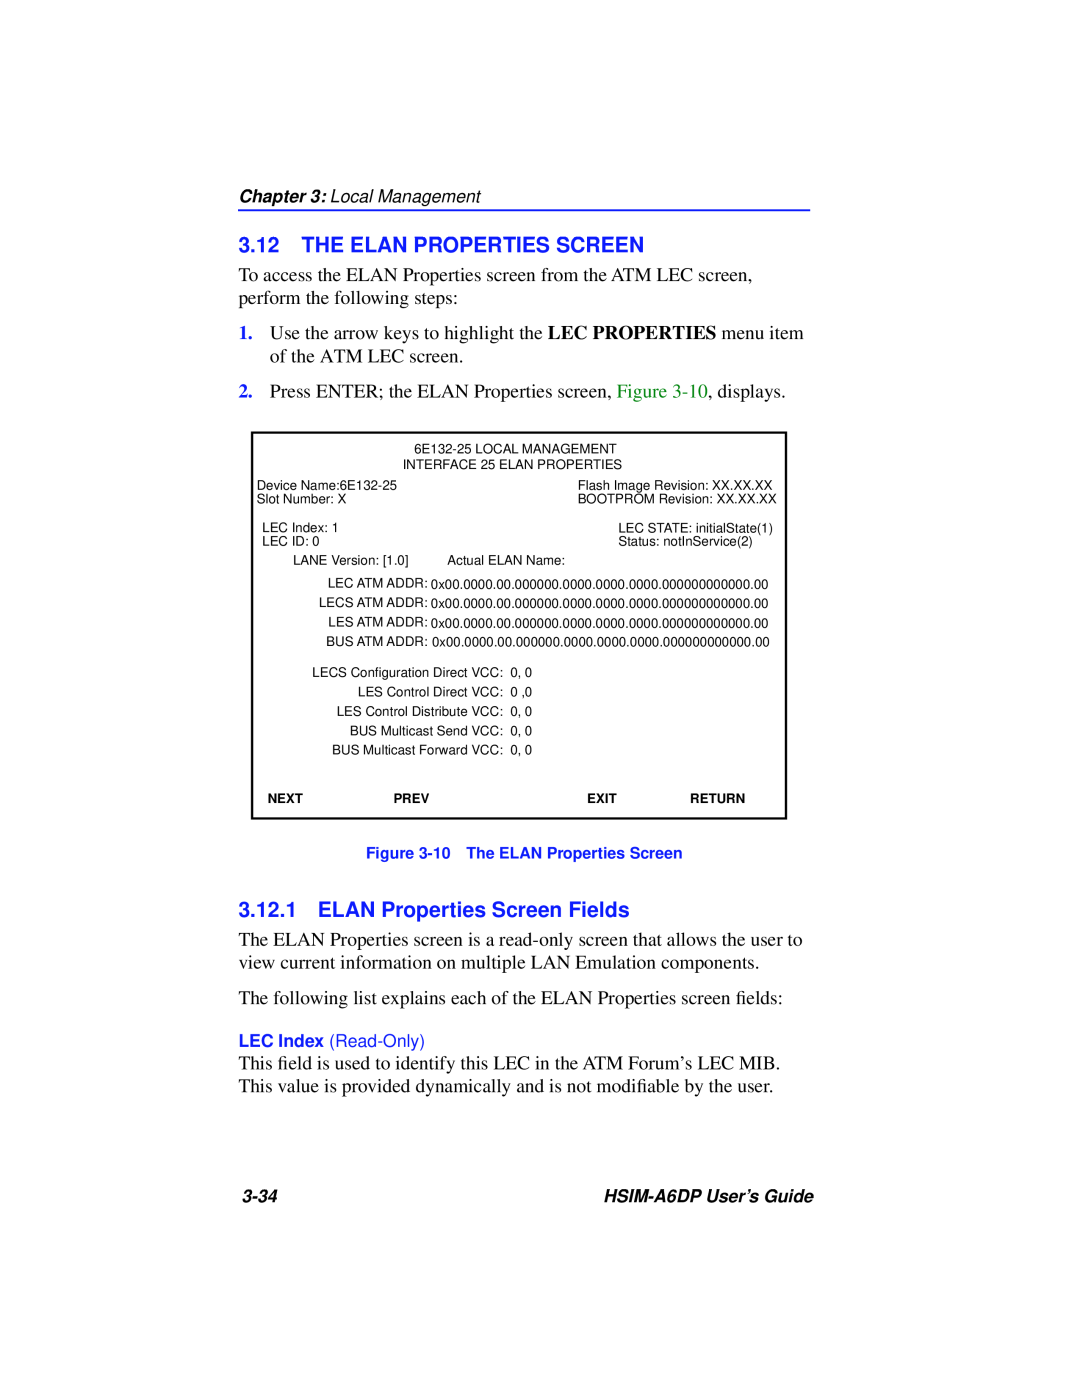 Cabletron Systems HSIM-A6DP manual The Elan Properties Screen, ELAN Properties Screen Fields 